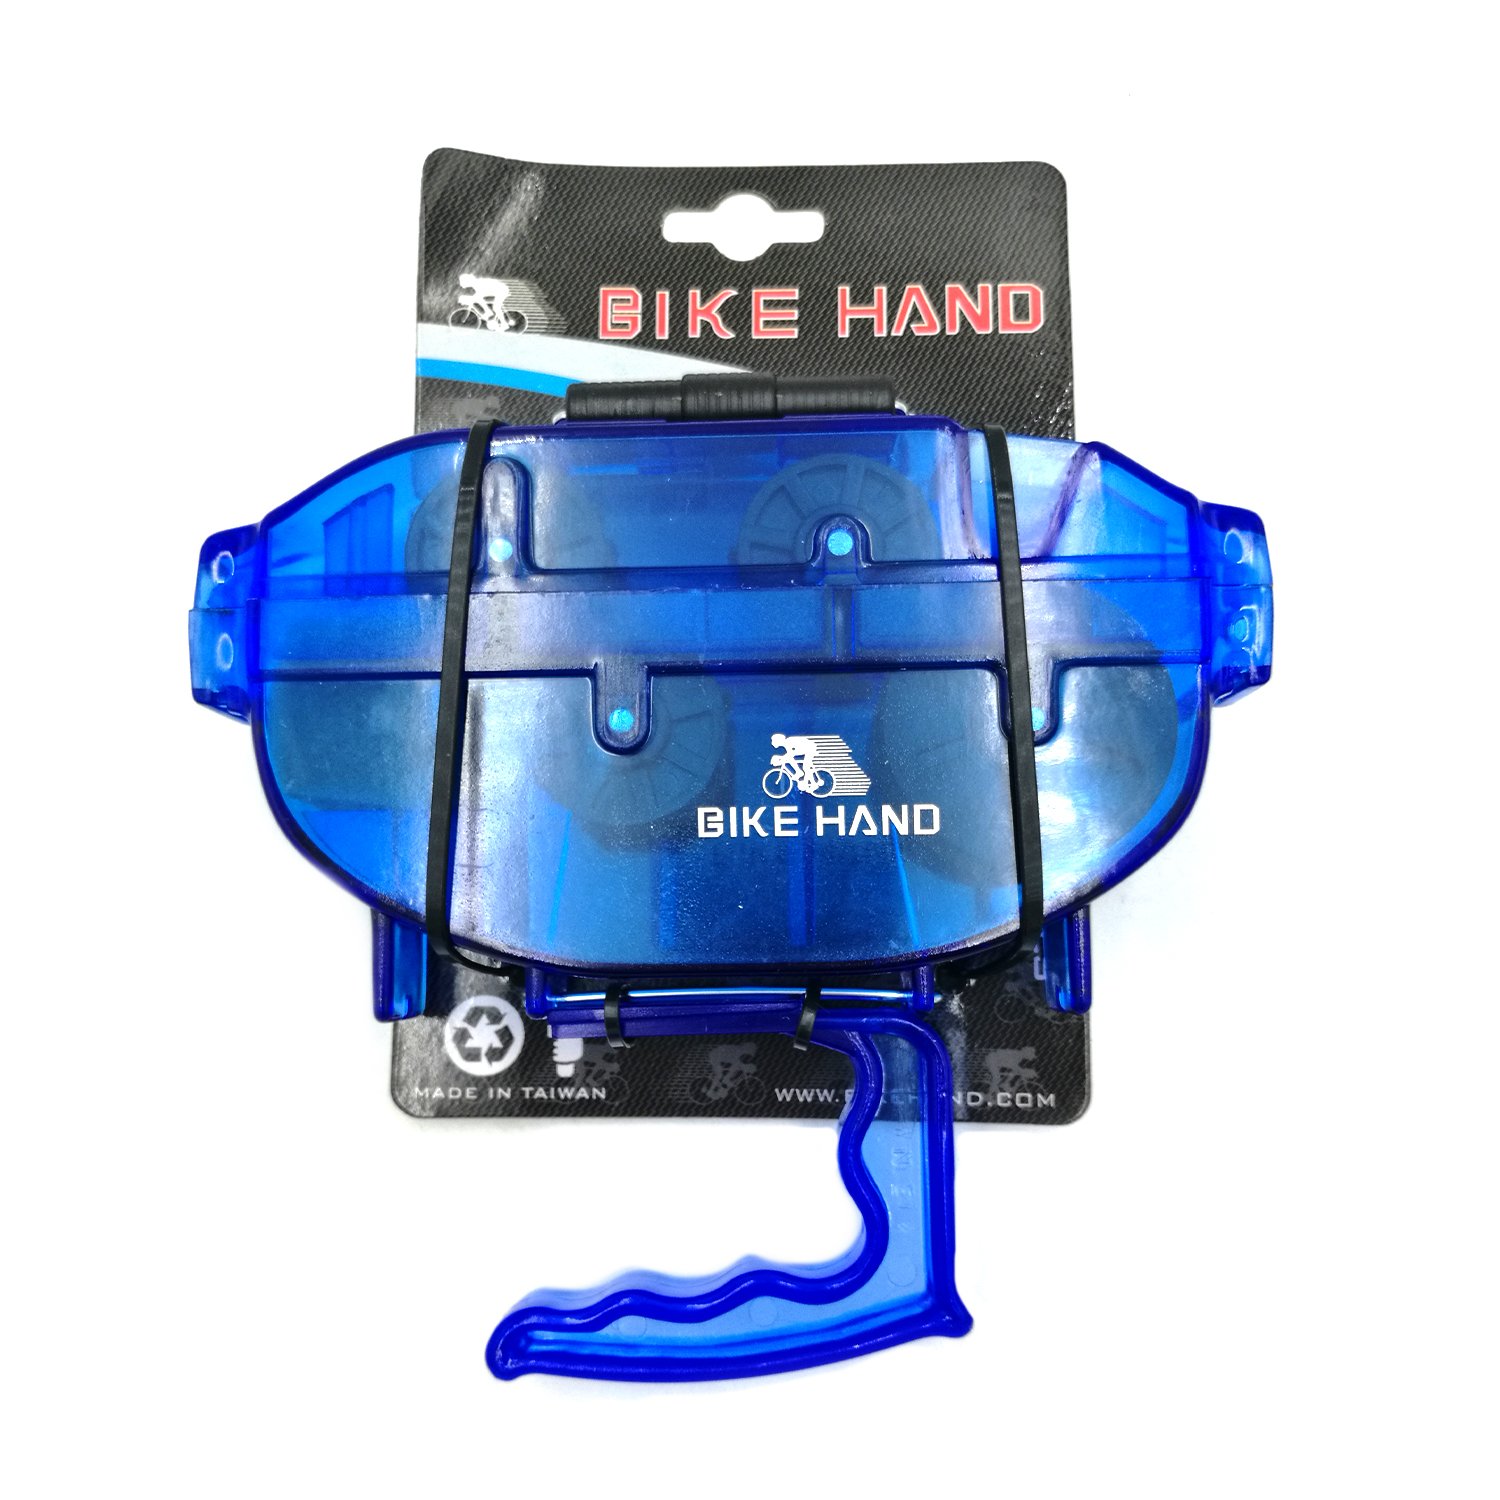 фото Машинка для чистки велосипедной цепи bikehand yc-791, в 2-х плоскостях, с рукояткой, голубая, 6-1479 bike hand